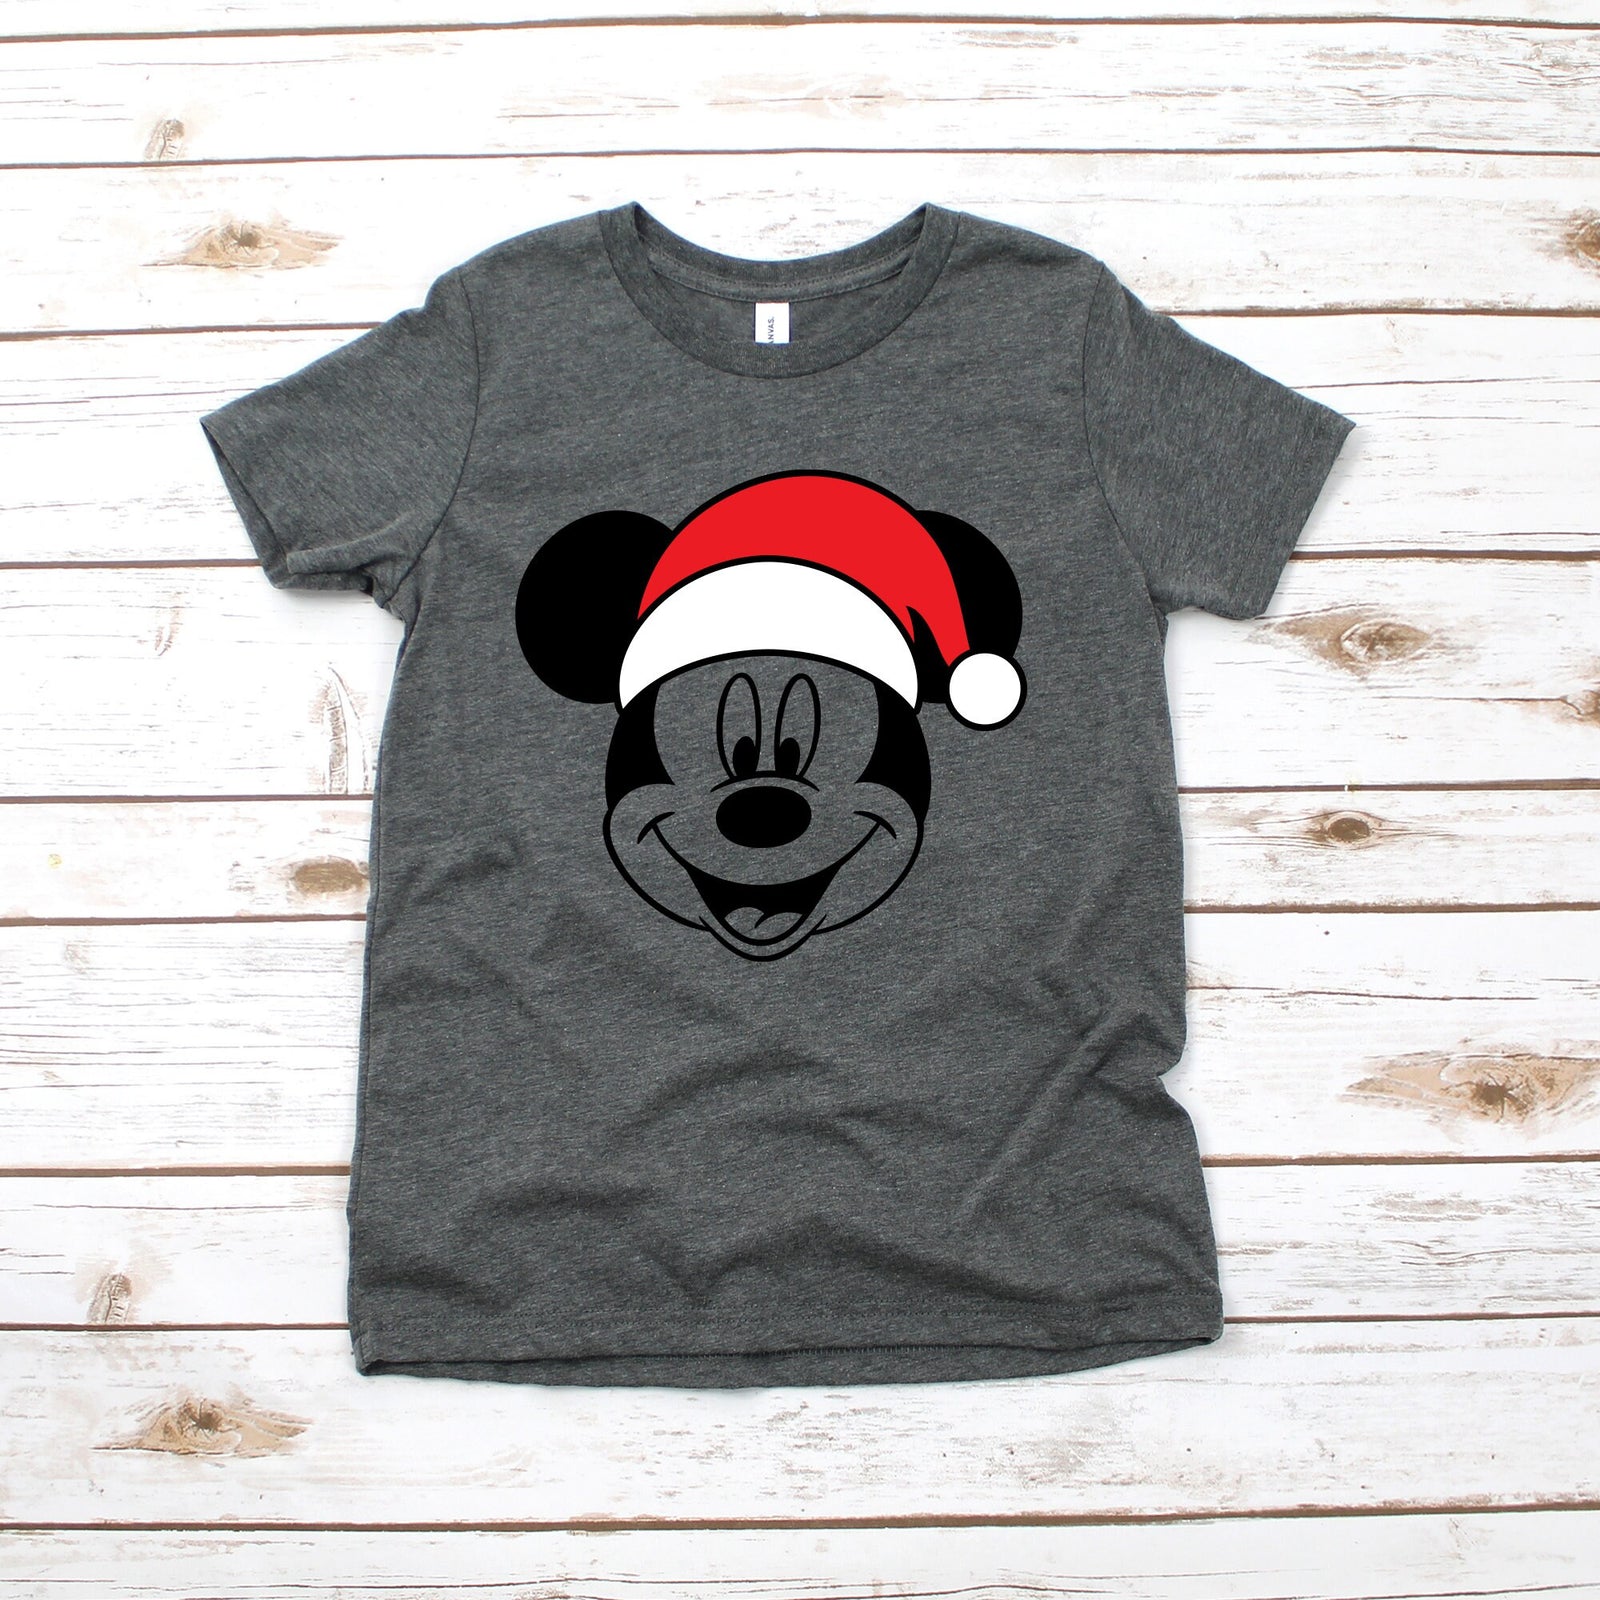 Santa Mickey Mouse - Aviator Sunglasses - Infant Toddler Youth Mickey Shirt - Disney Kids Shirts - Christmas Holiday Shirt